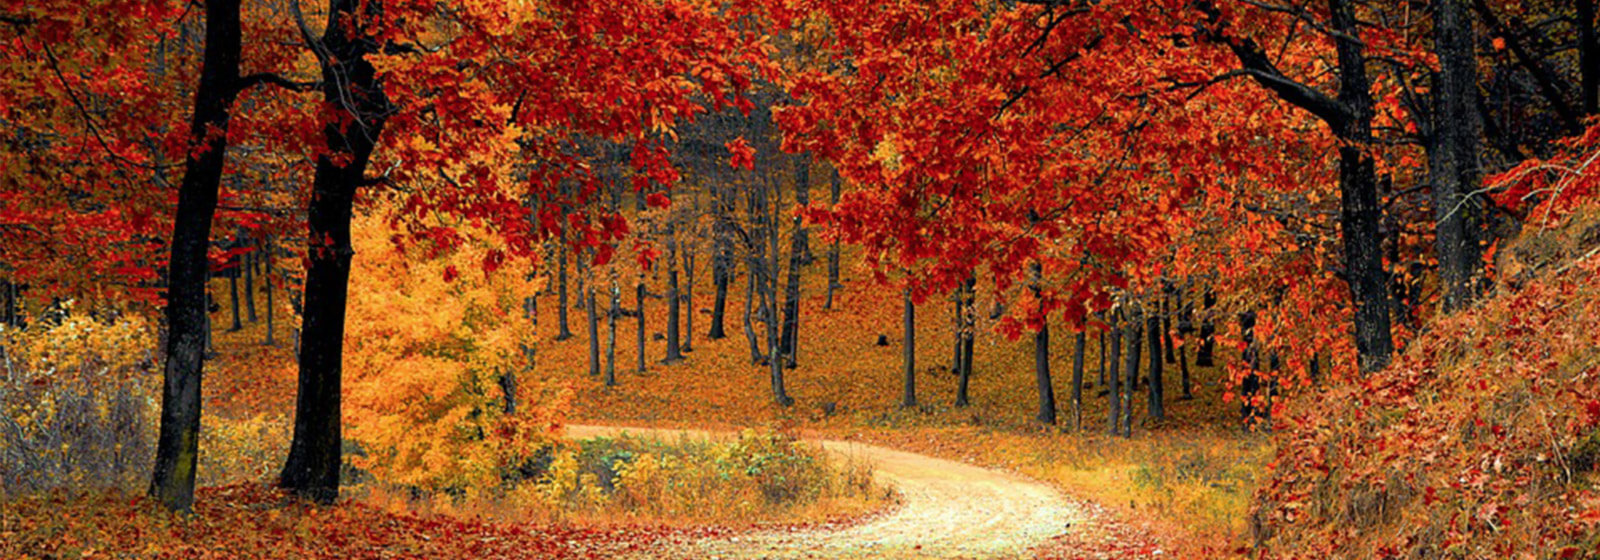 Fall road image slide